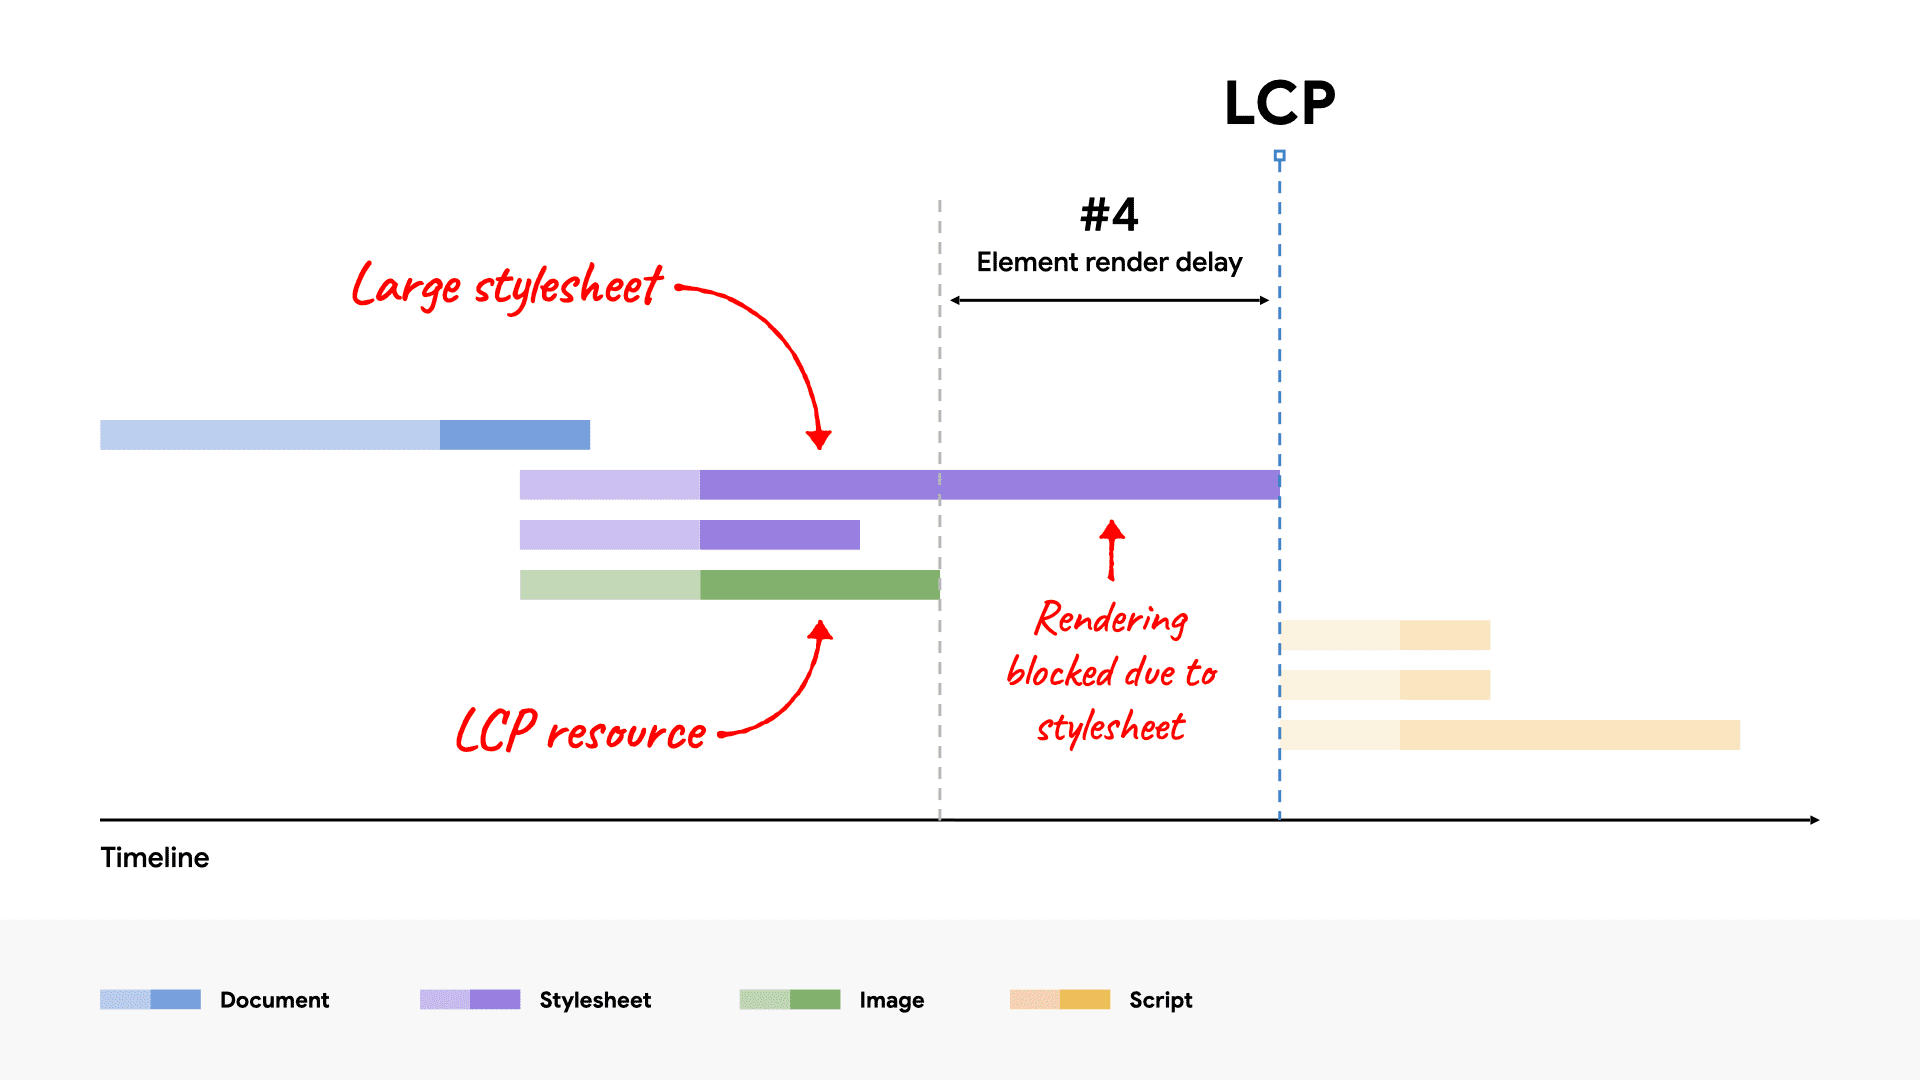 LCP 리소스보다 로드 시간이 오래 걸리기 때문에 LCP 요소의 렌더링을 차단하는 대용량 CSS 파일을 보여주는 네트워크 워터폴 다이어그램